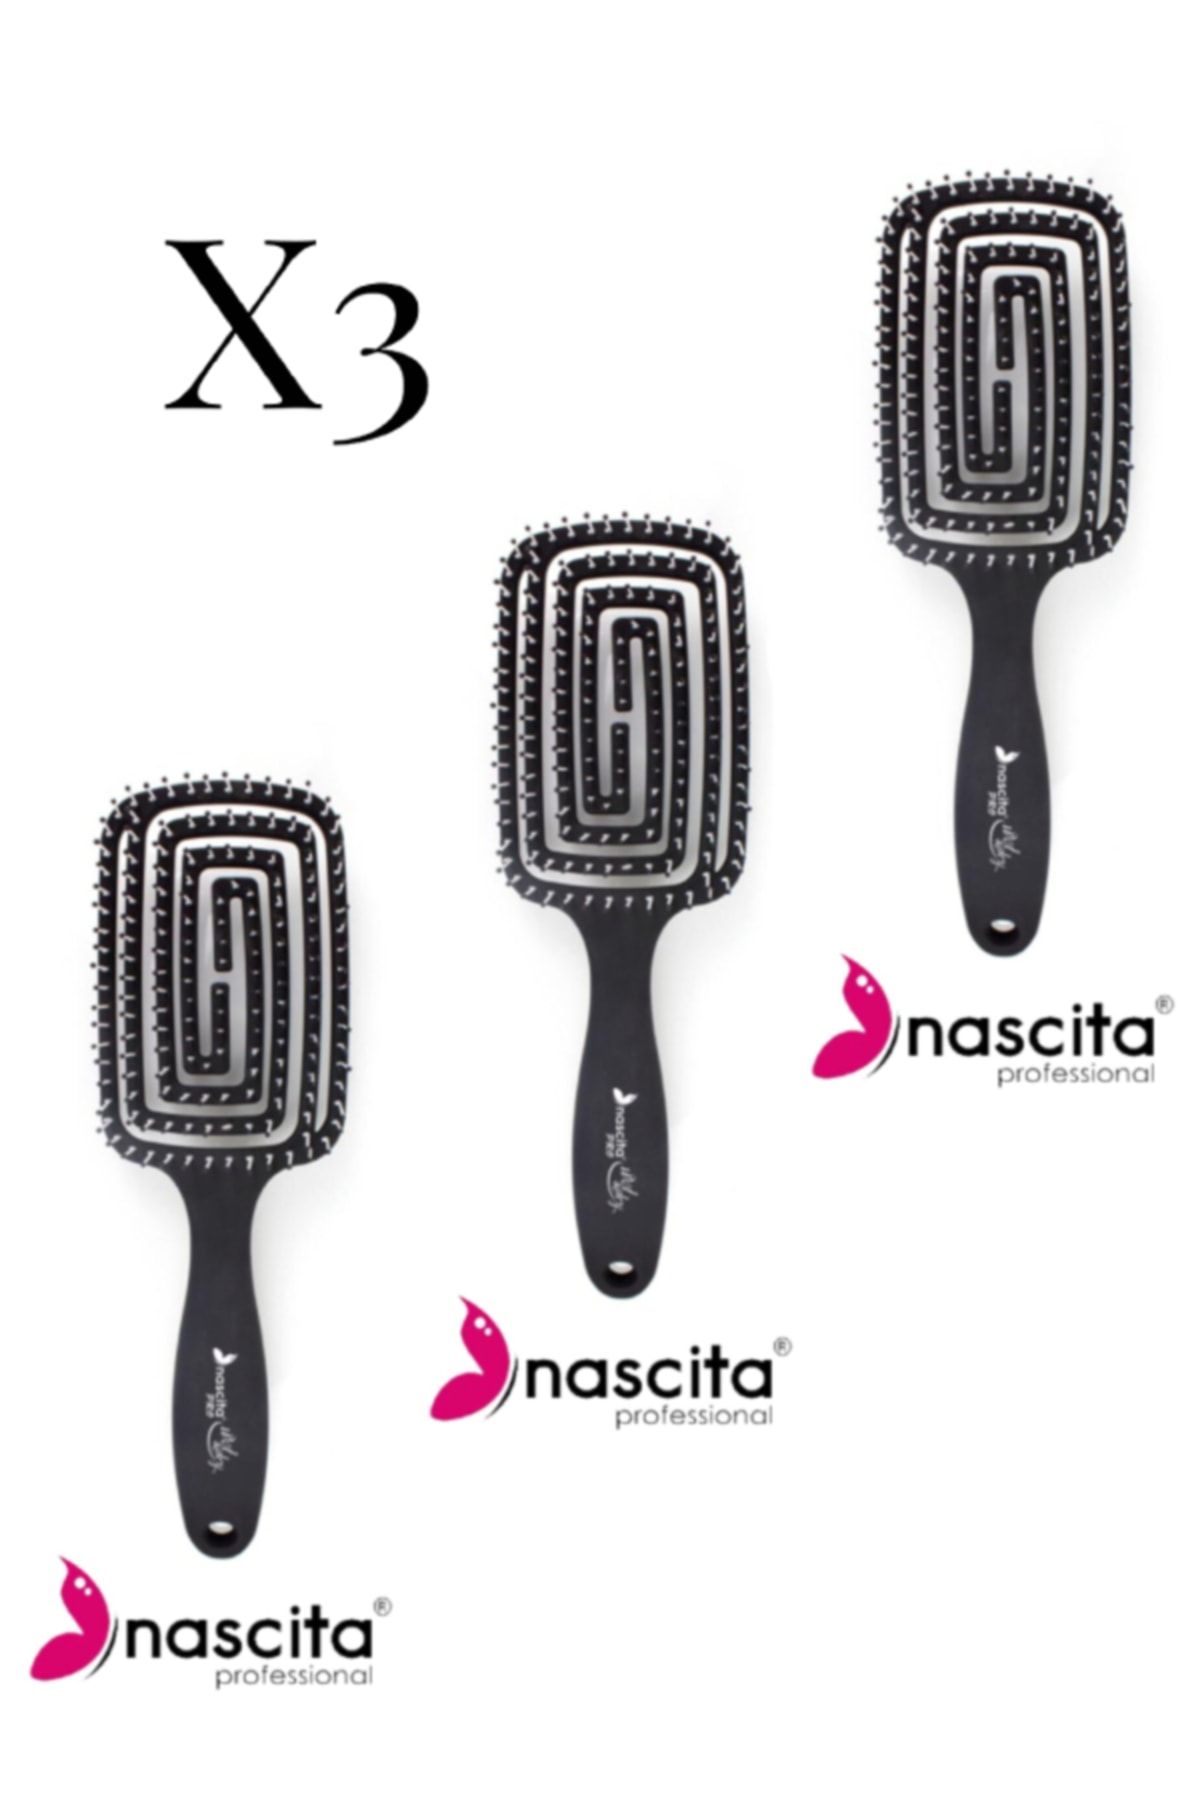 Nascita Pro Üç Boyutlu Saç Fırçası Pro 10 Nasfpro00010 X 3 Adet